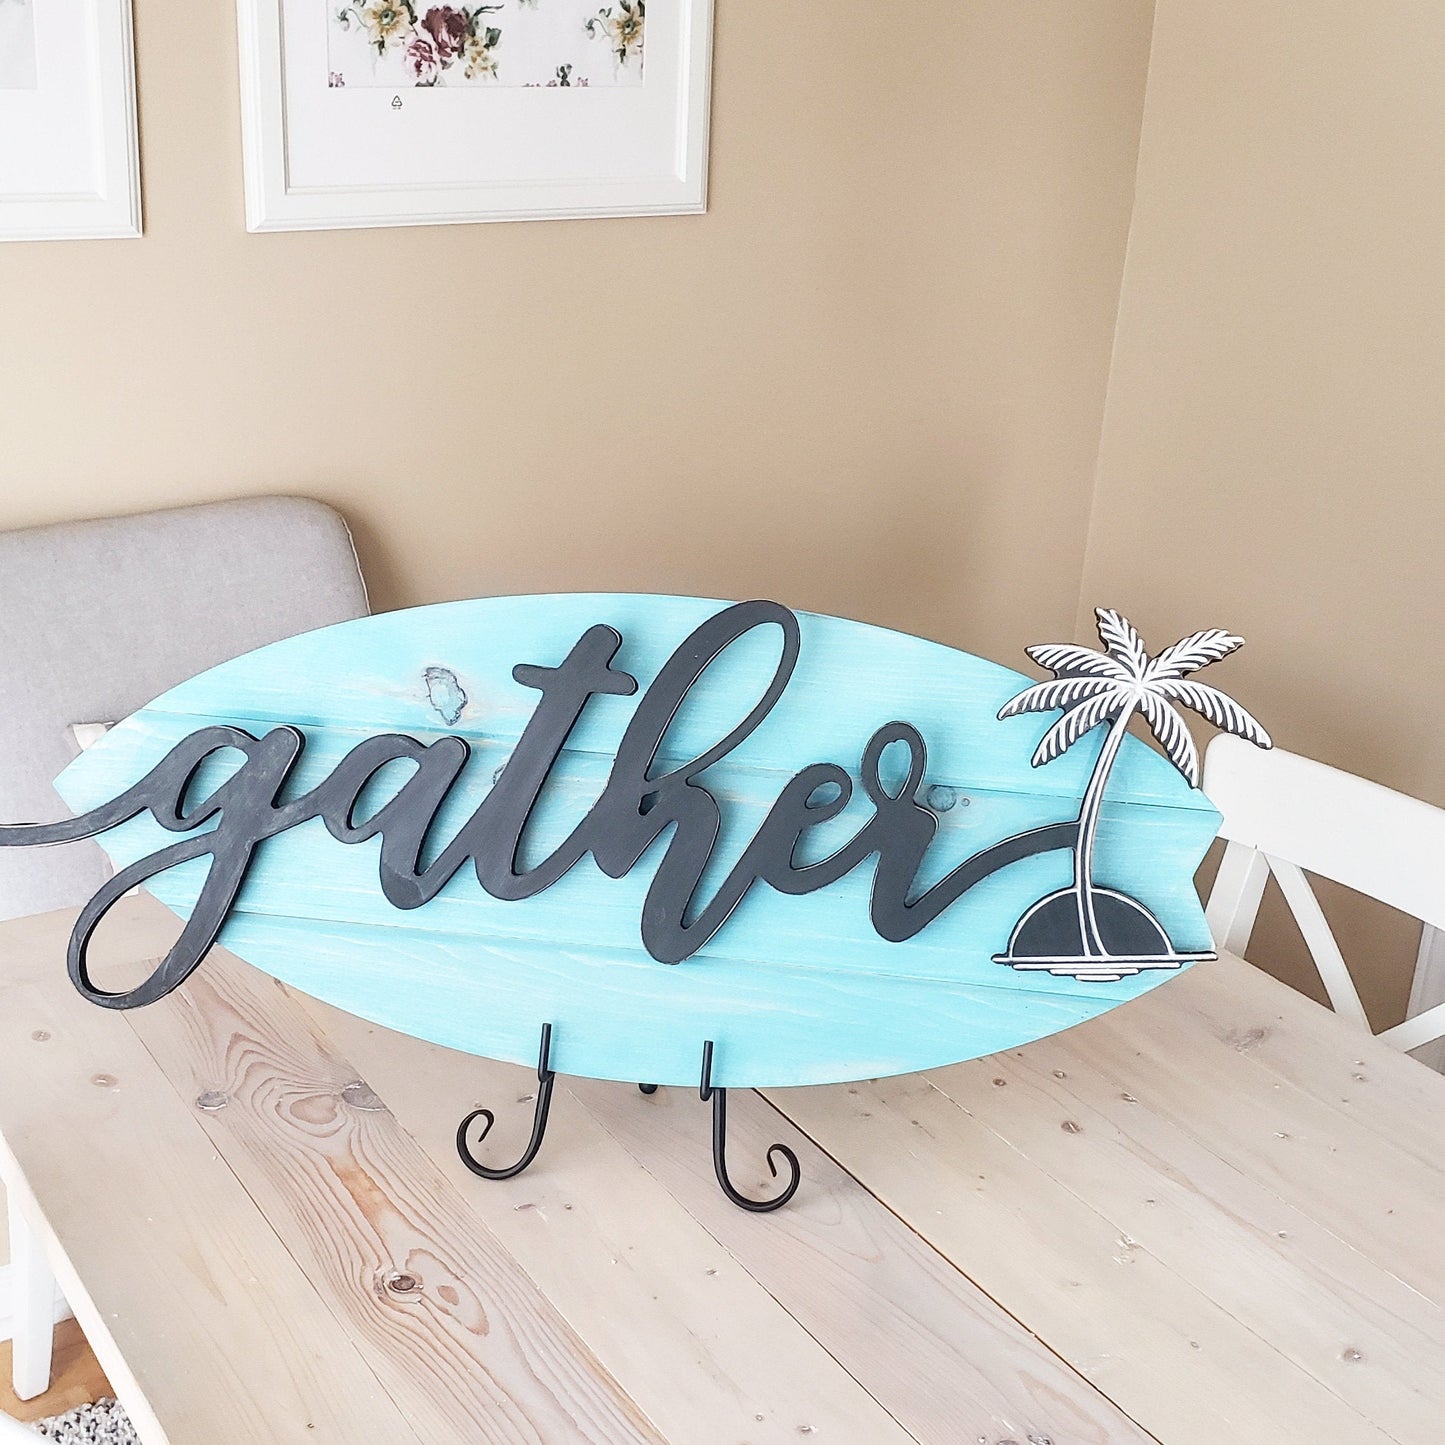 Gathersign  surfboard